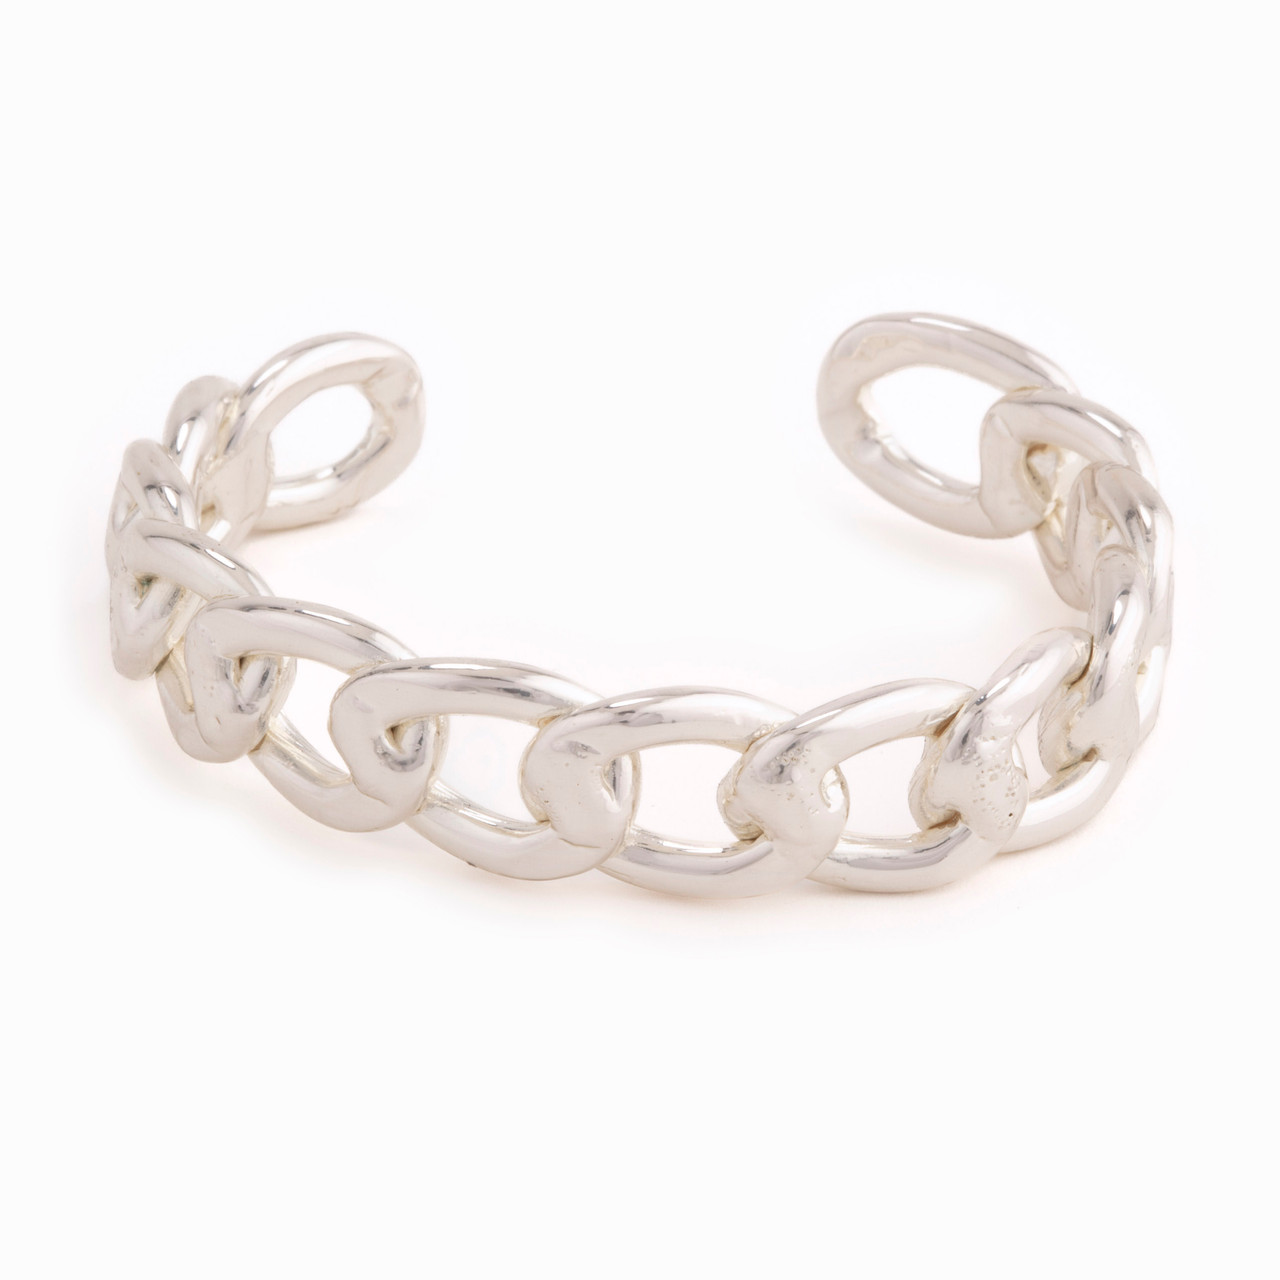 Silver Flat Chain Cuff